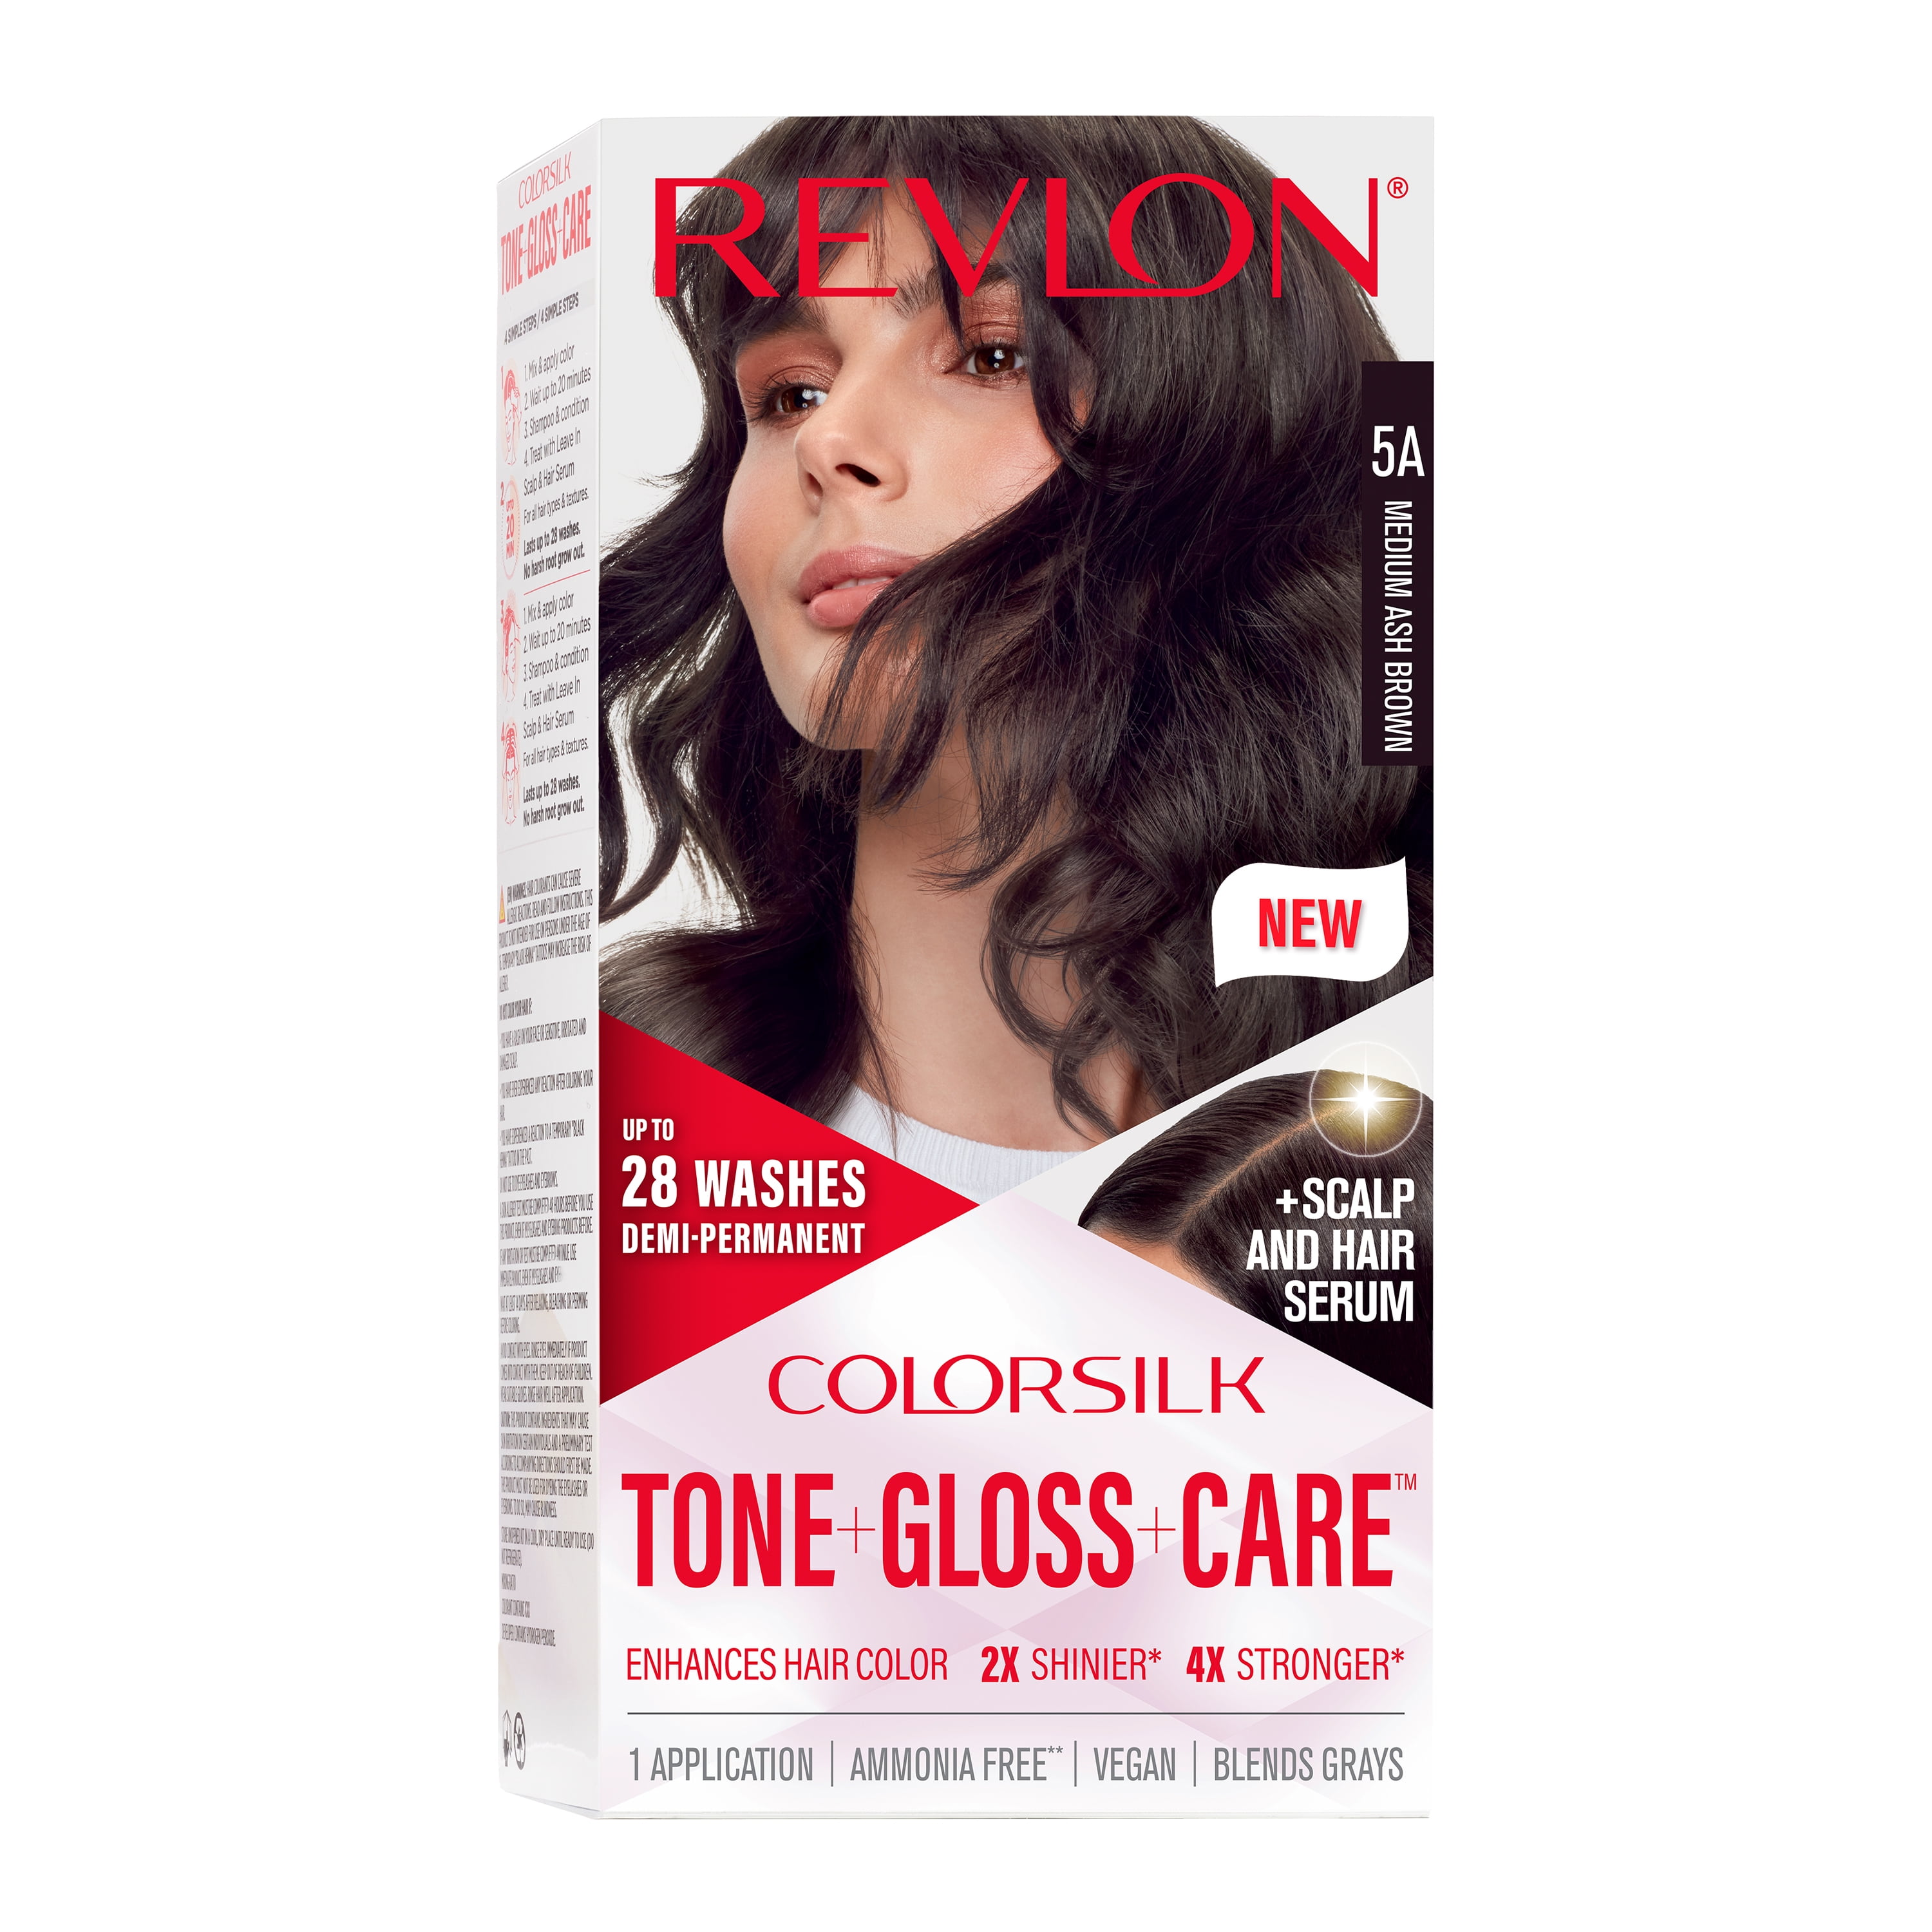 Revlon ColorSilk Tone + Gloss + Care Demi-Permanent Hair Color, 5A Medium  Ash Brown, 4.5 fl. oz